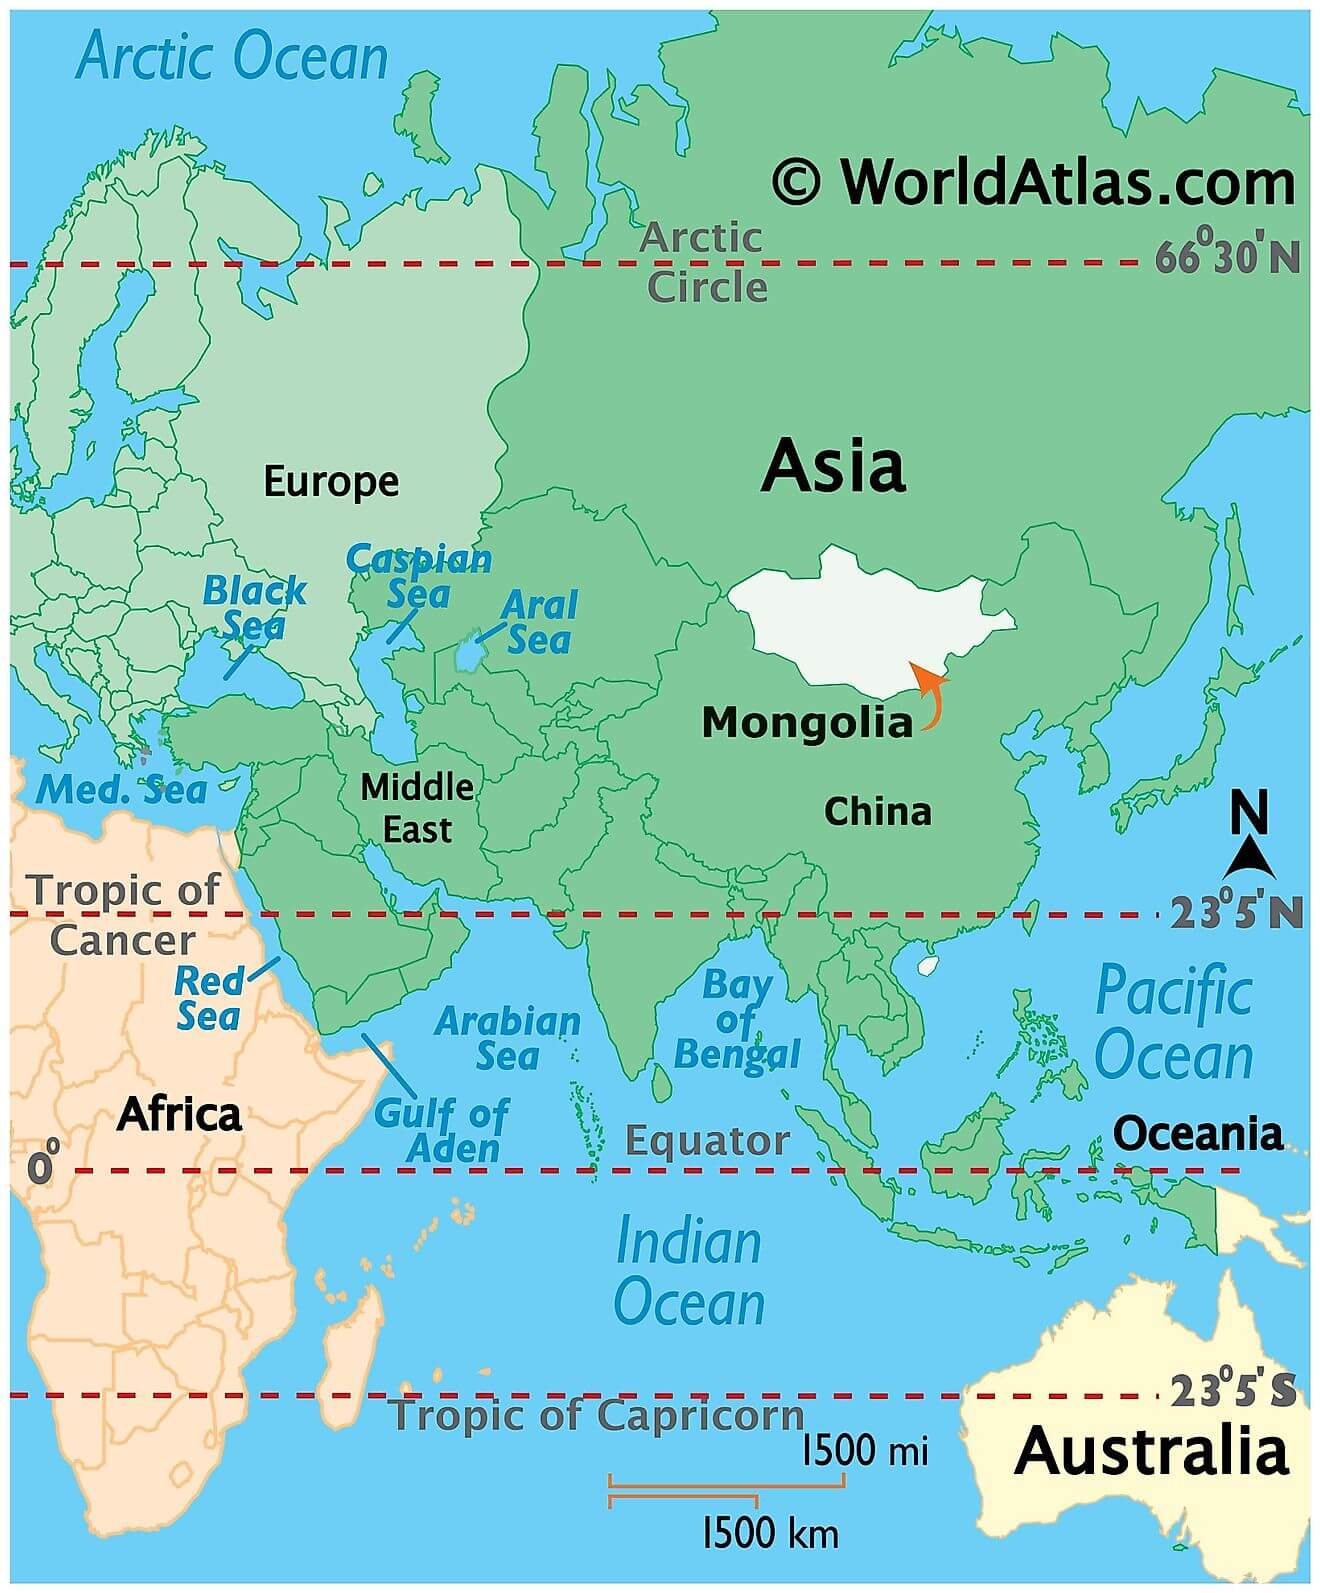 Where is Mongolia?